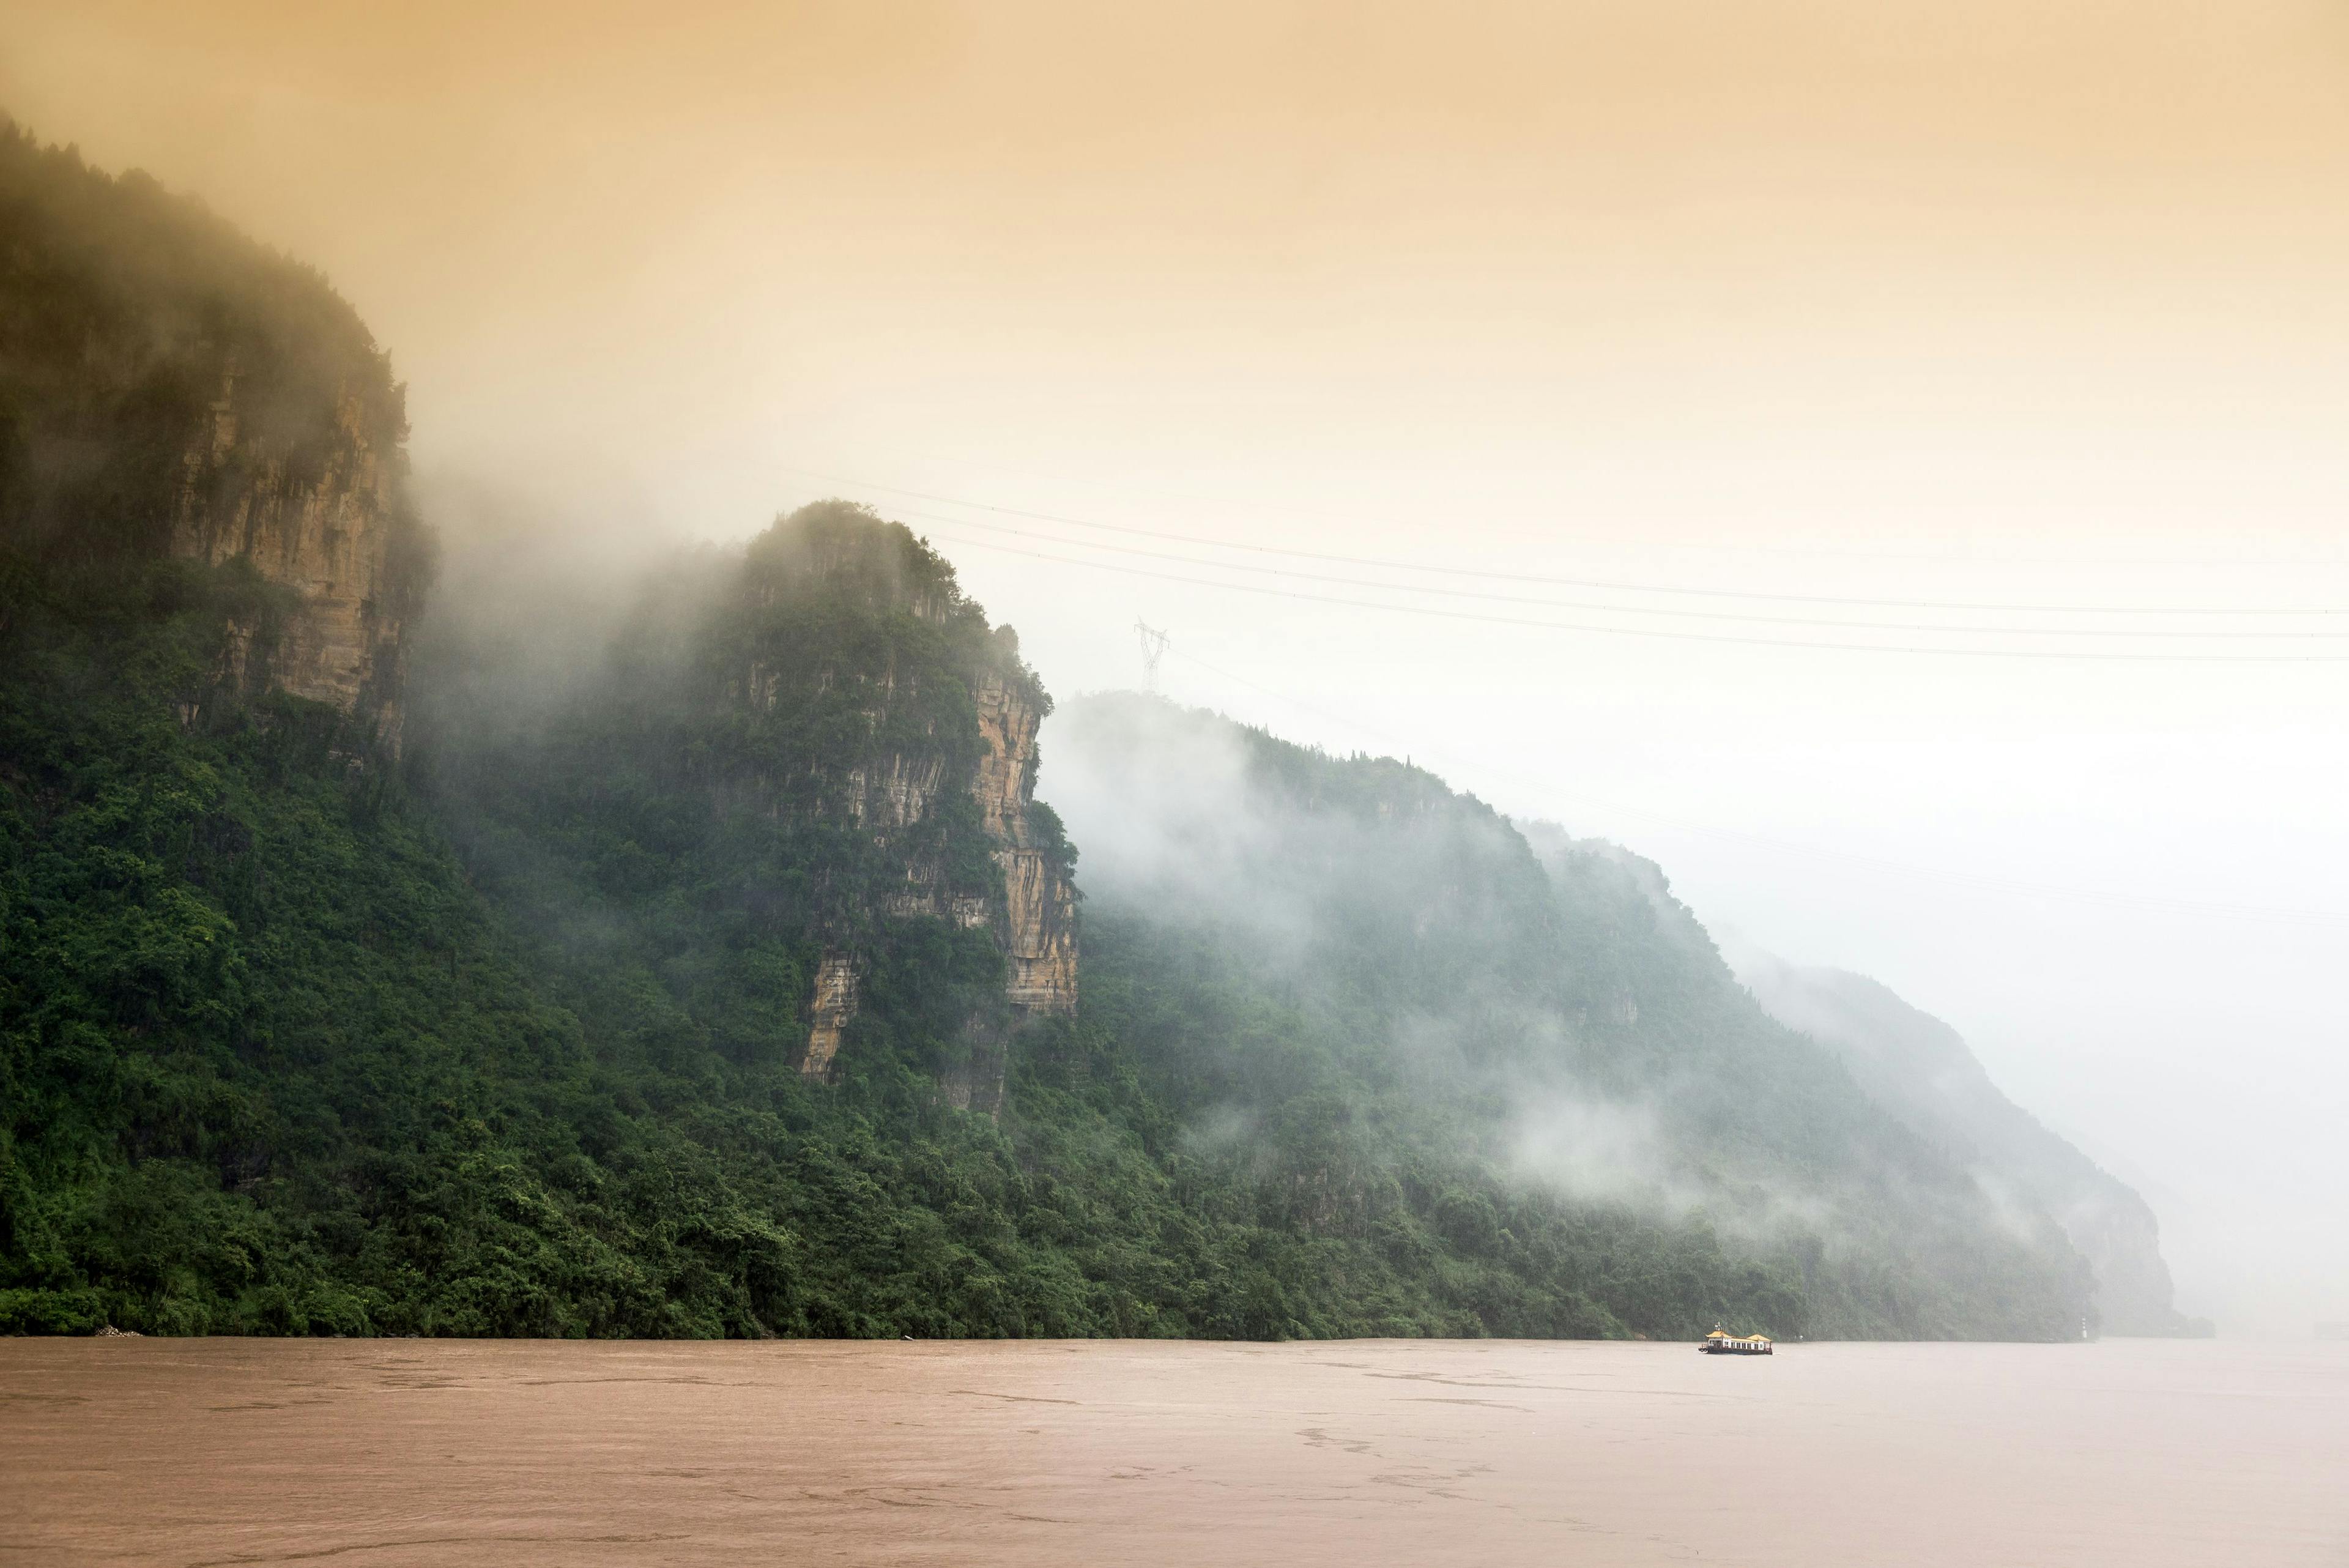 China's largest rivers: the Yangtze | Image Credit: © gui yong nian - stock.adobe.com